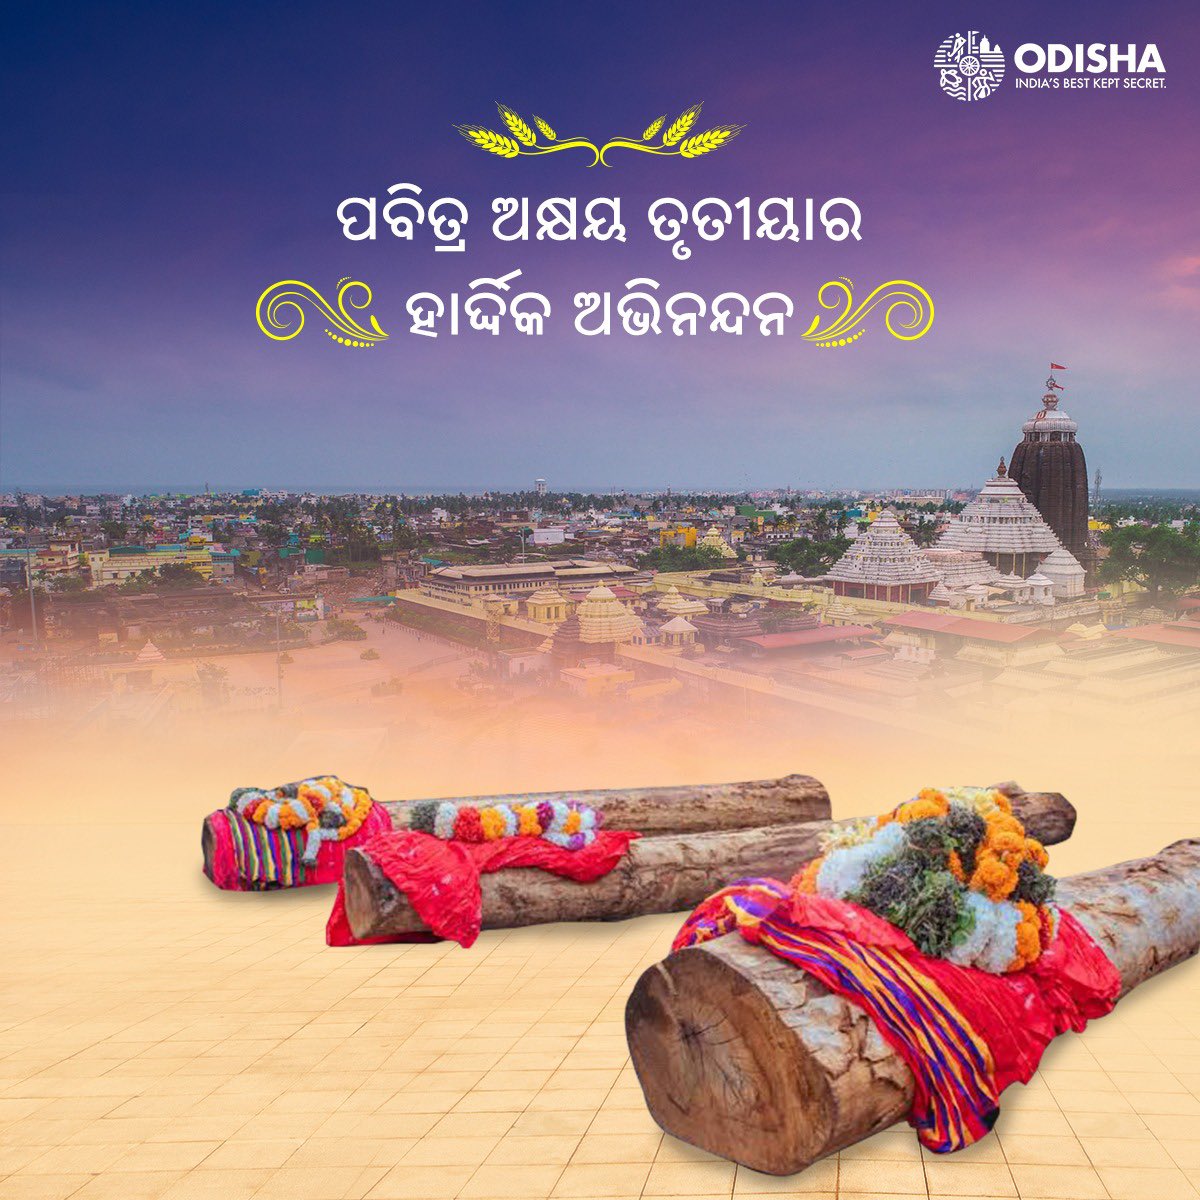 Celebrating #AkshayTritiya, an auspicious occasion that marks the beginning of chariot construction for the Trinity at Shri Jagannath Dham in Puri. #Odisha #odishatourism